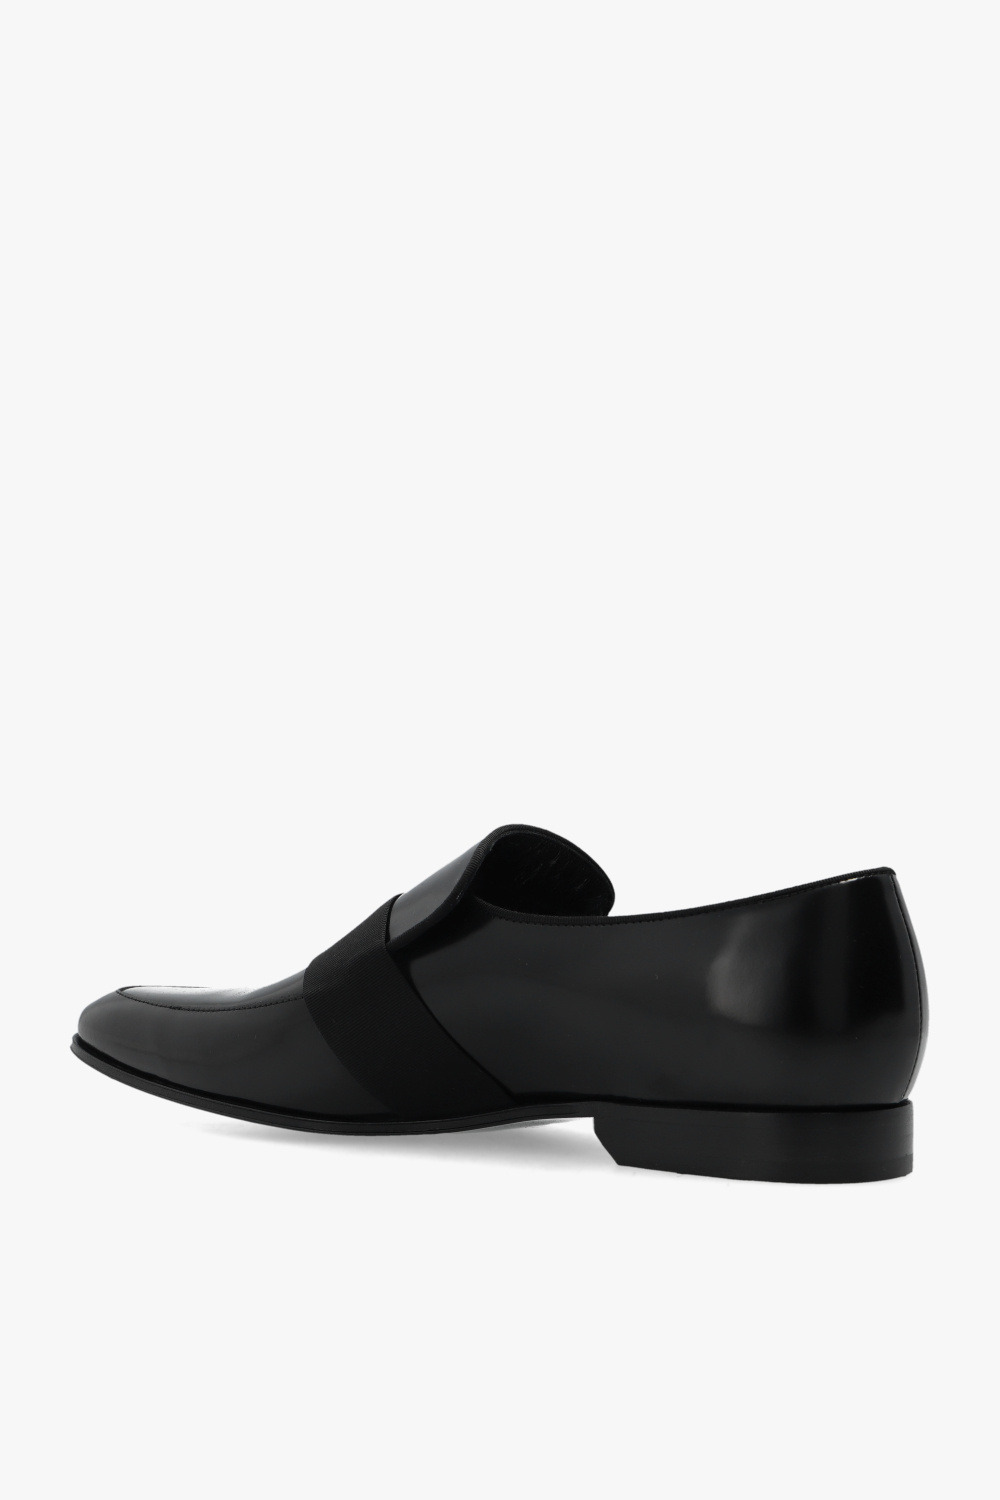 Burberry ‘Sanford’ shoes